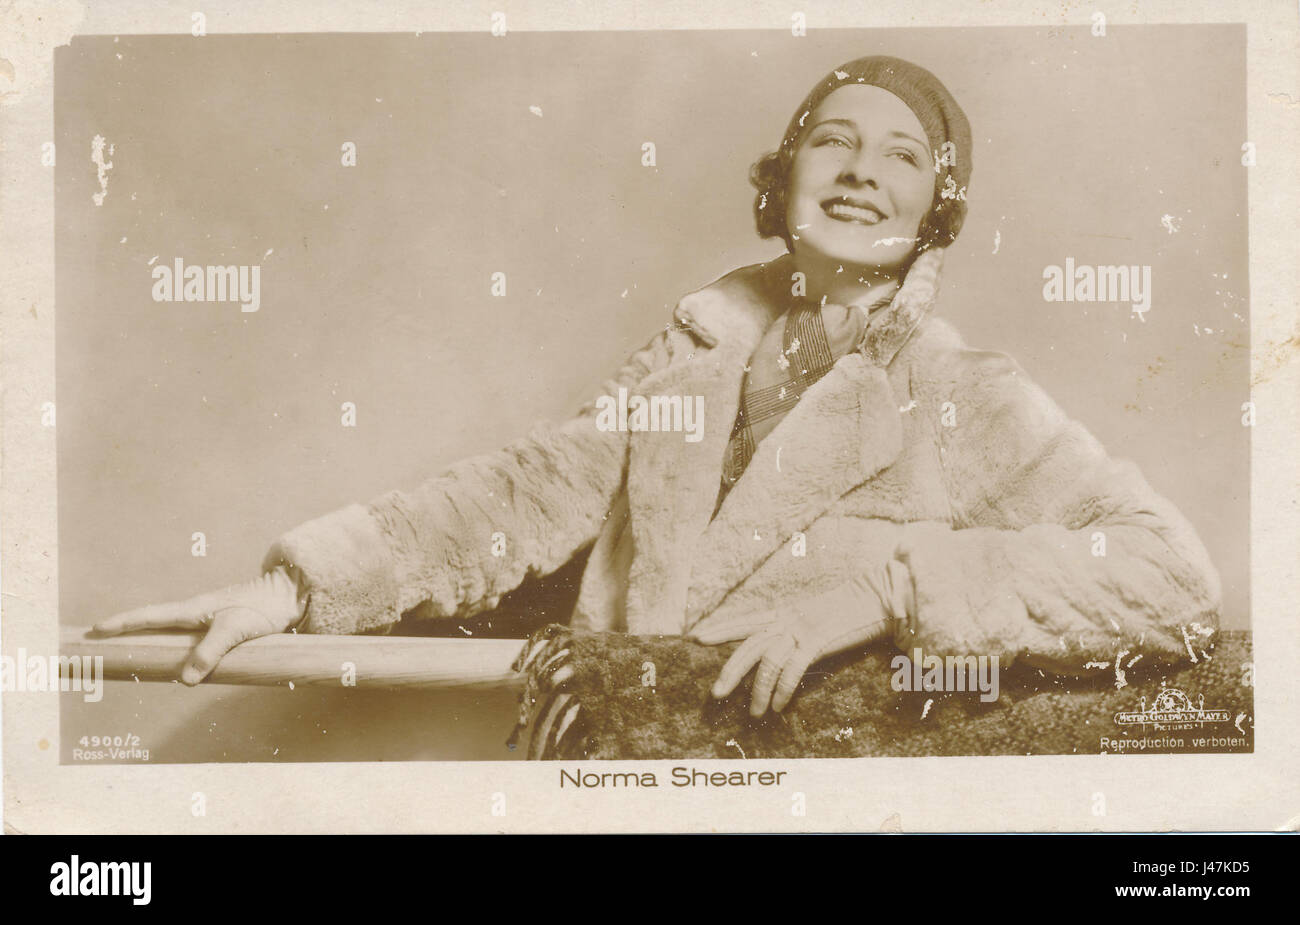 Norma Shearer 4900 2 MGM Ross Verlag Stock Photo